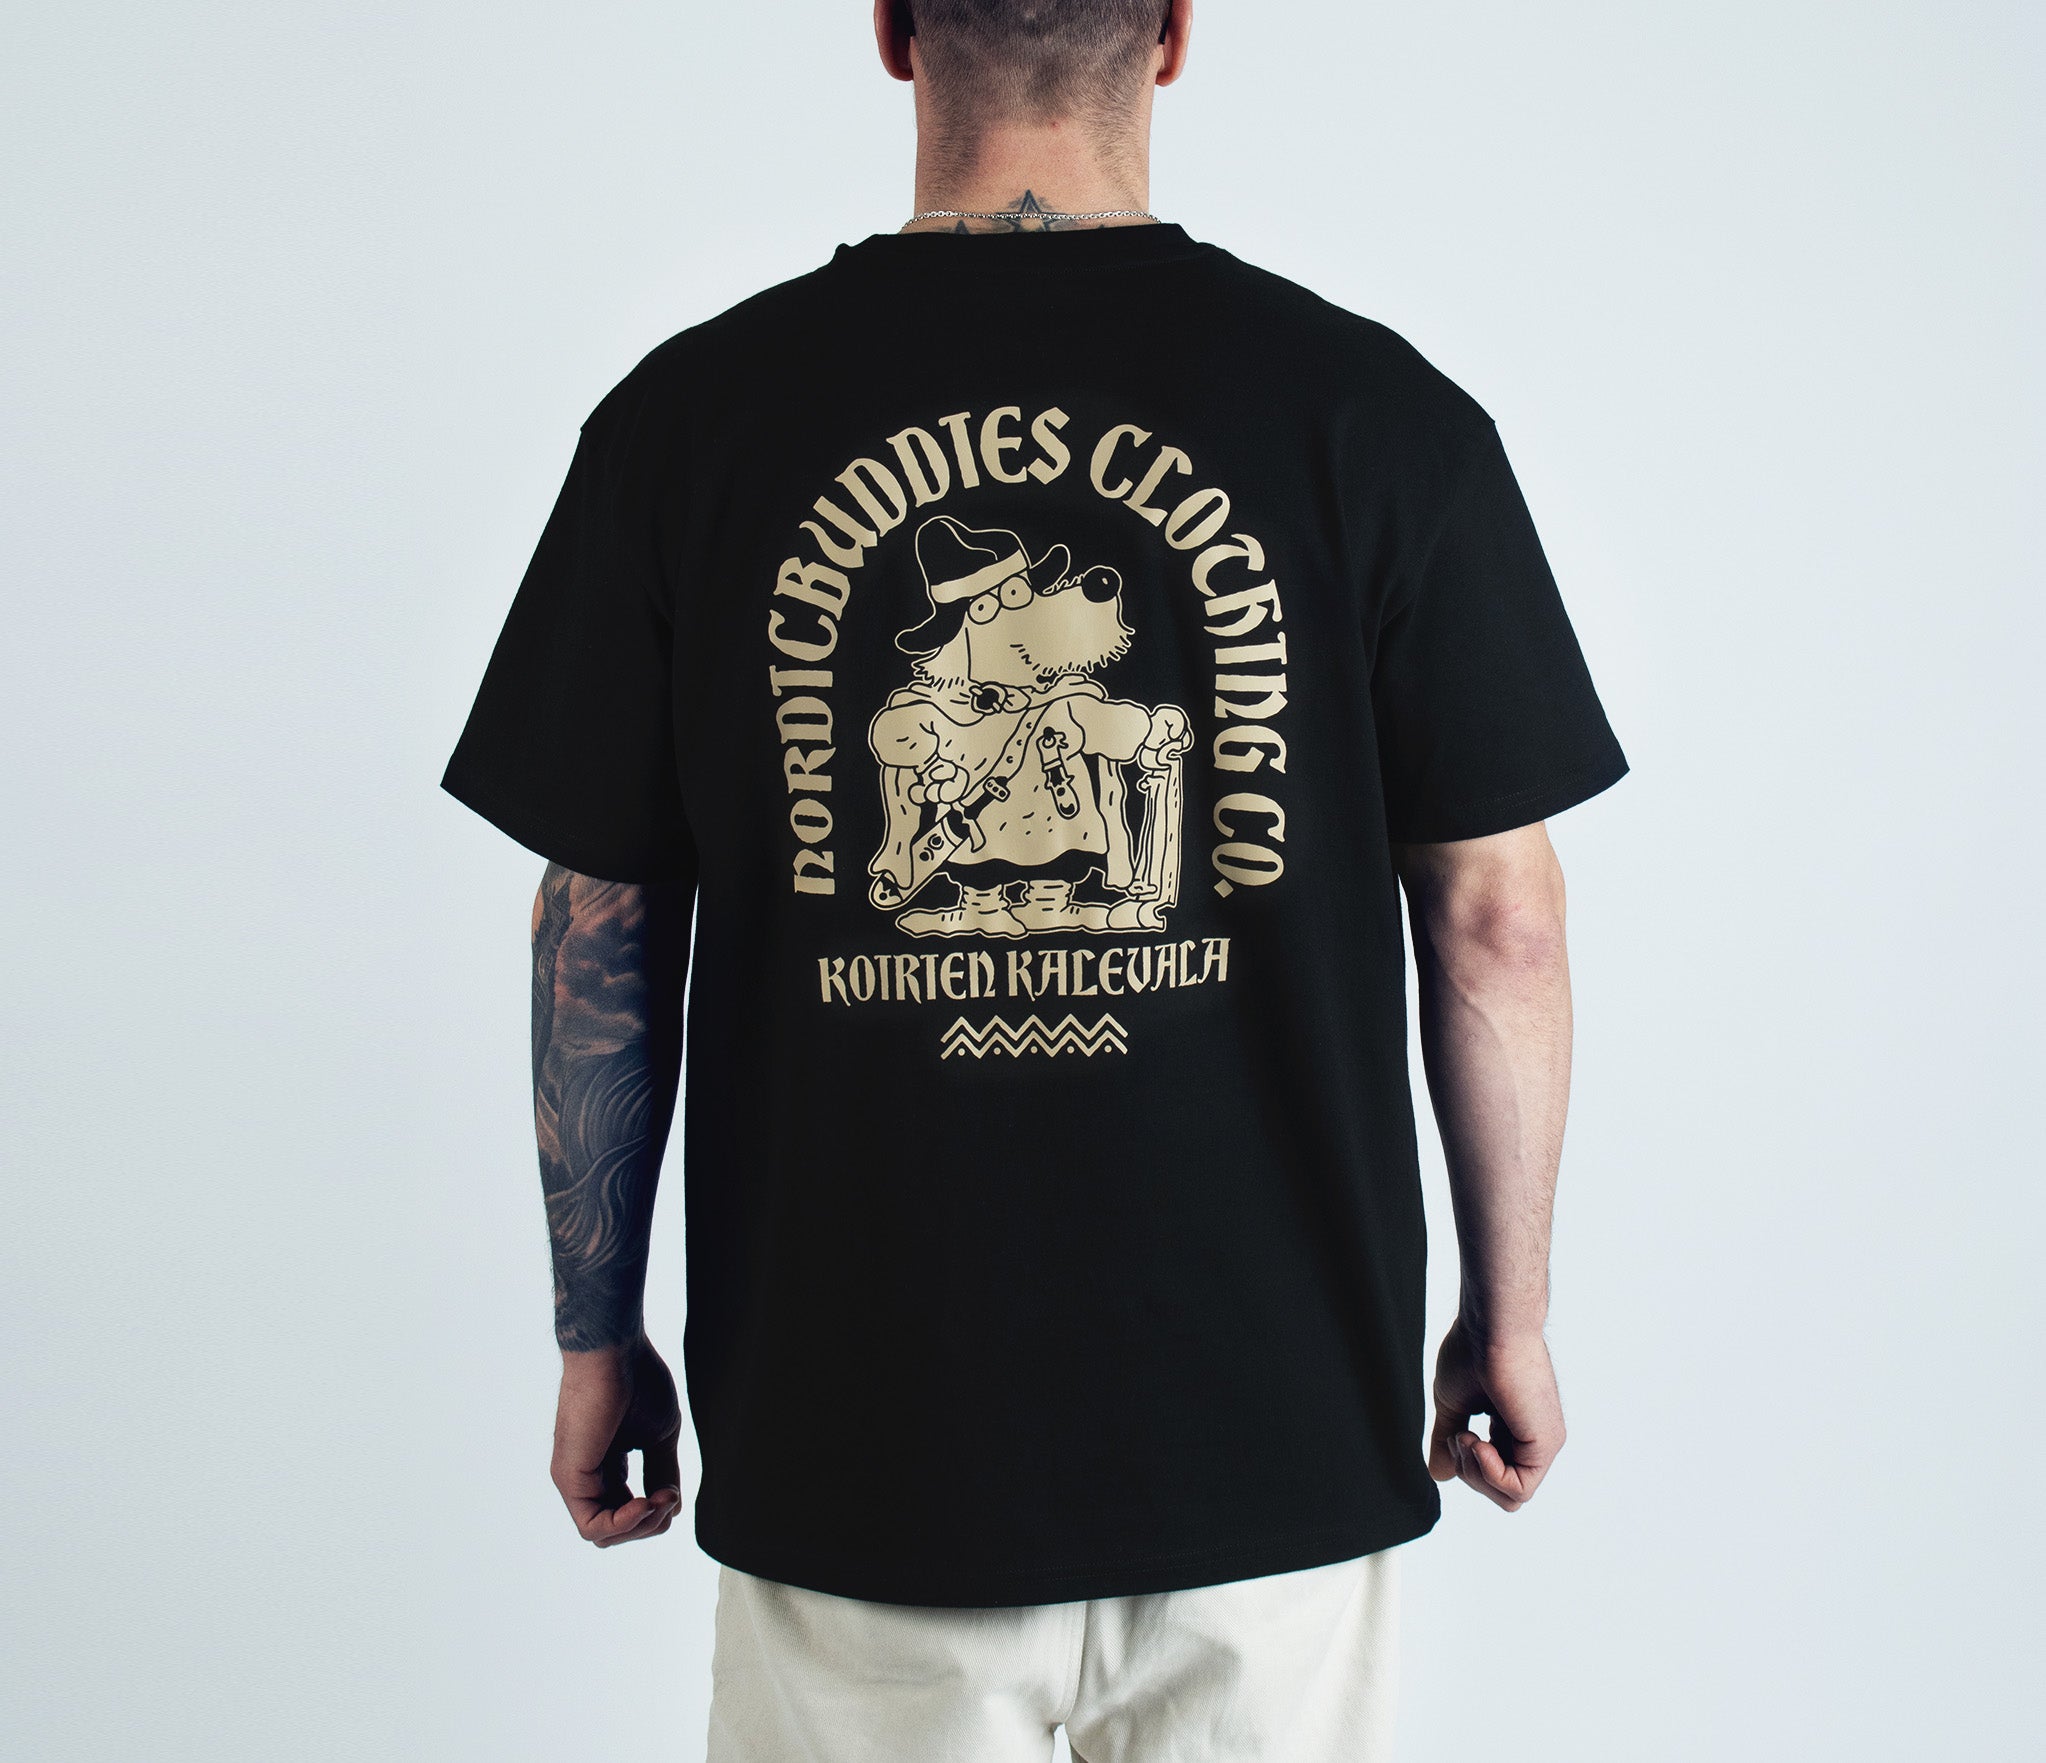 T-Shirt Mauri Kunnas The Canine Kalevala - Black